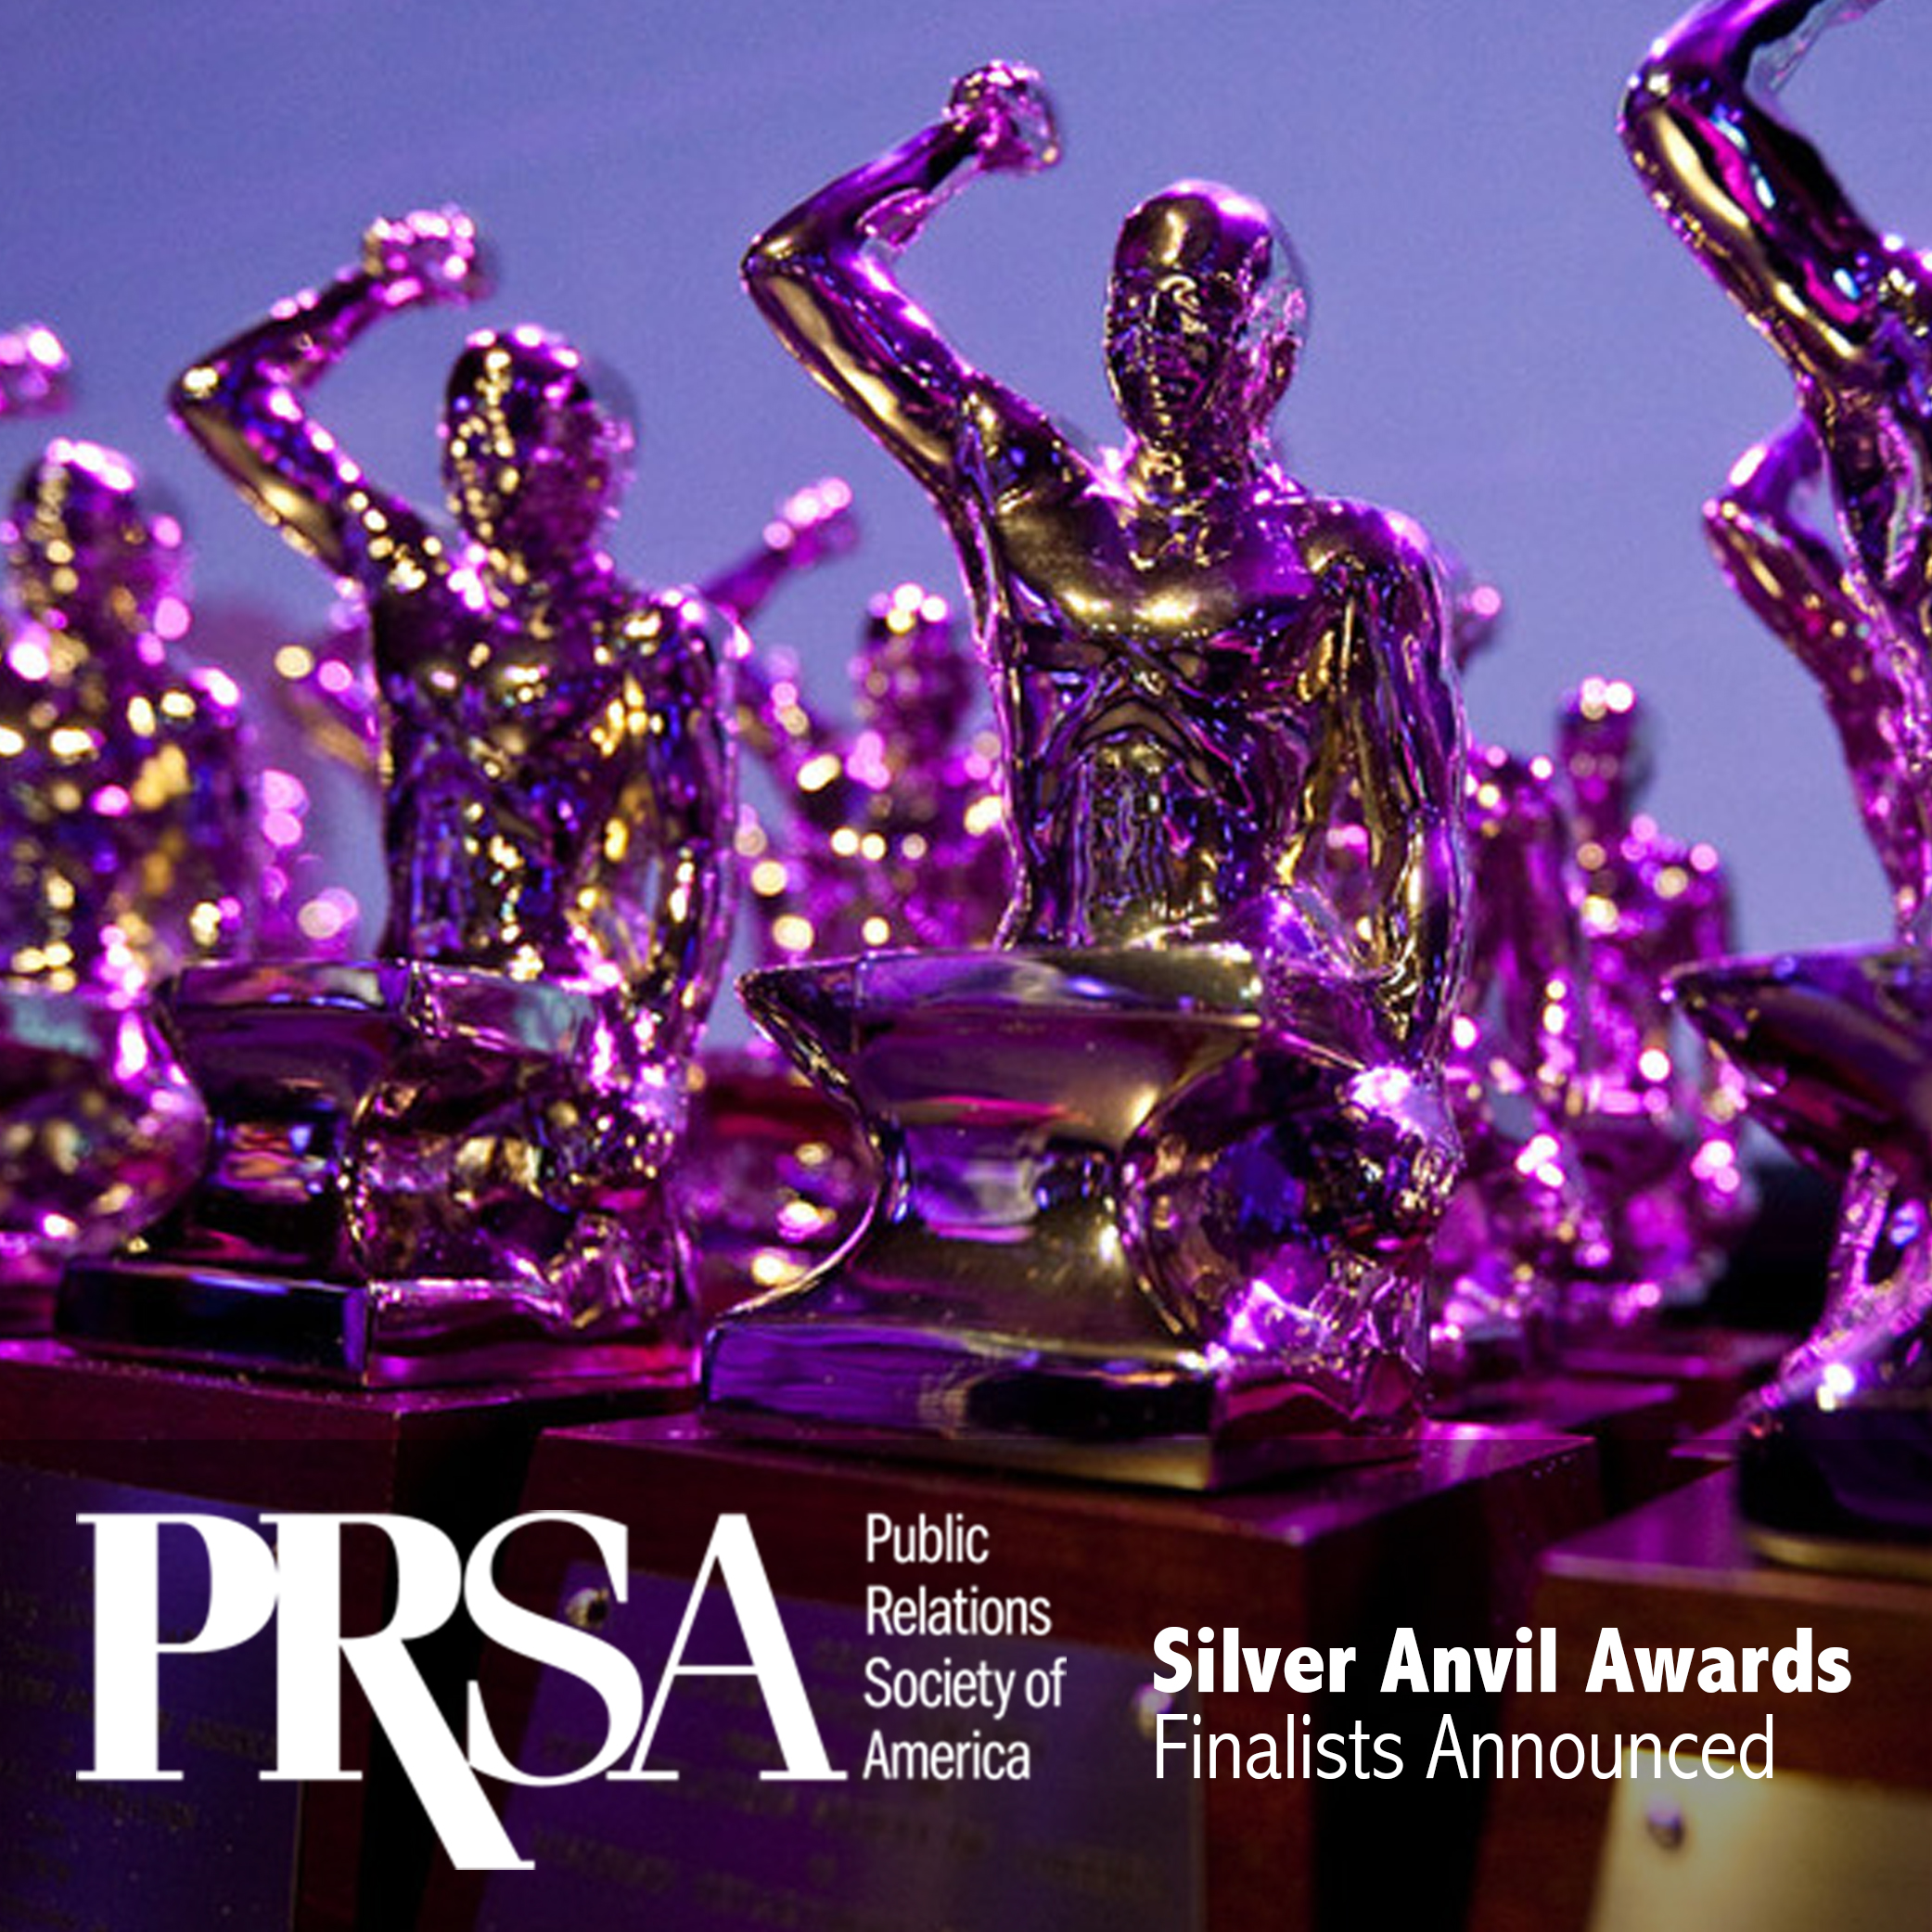 PRSA Silver Anvil Awards Finalists